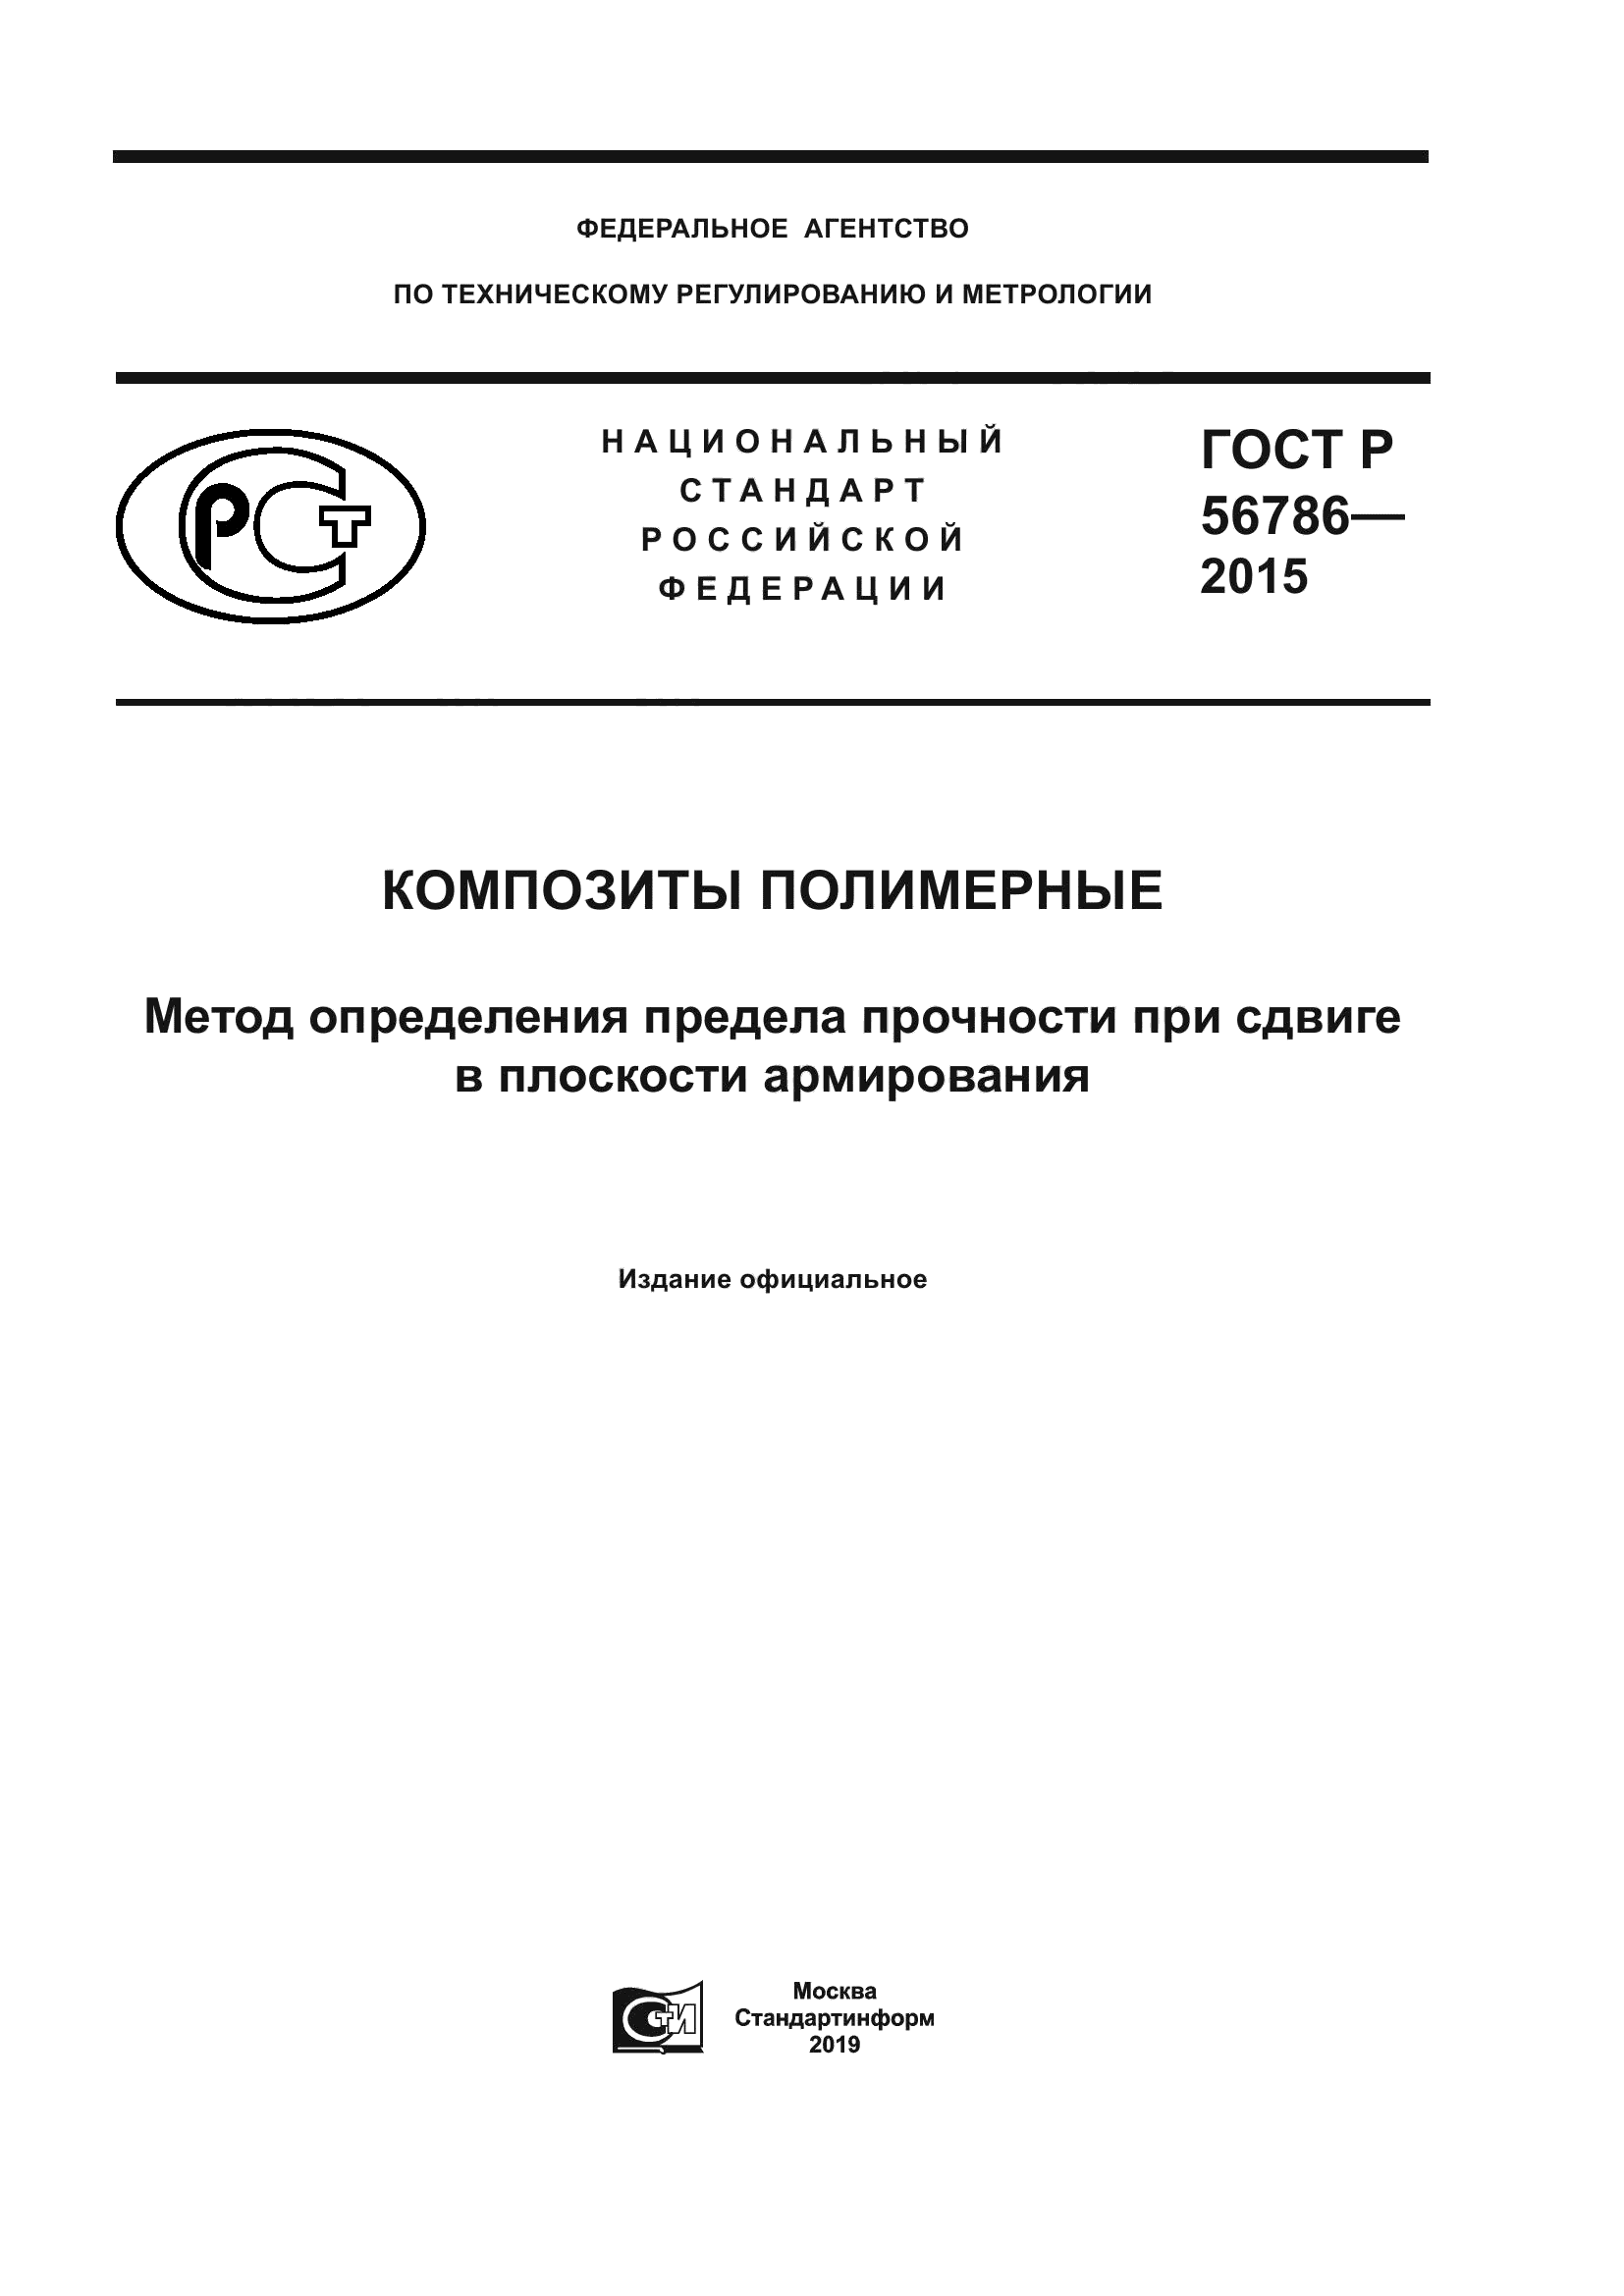 ГОСТ Р 56786-2015